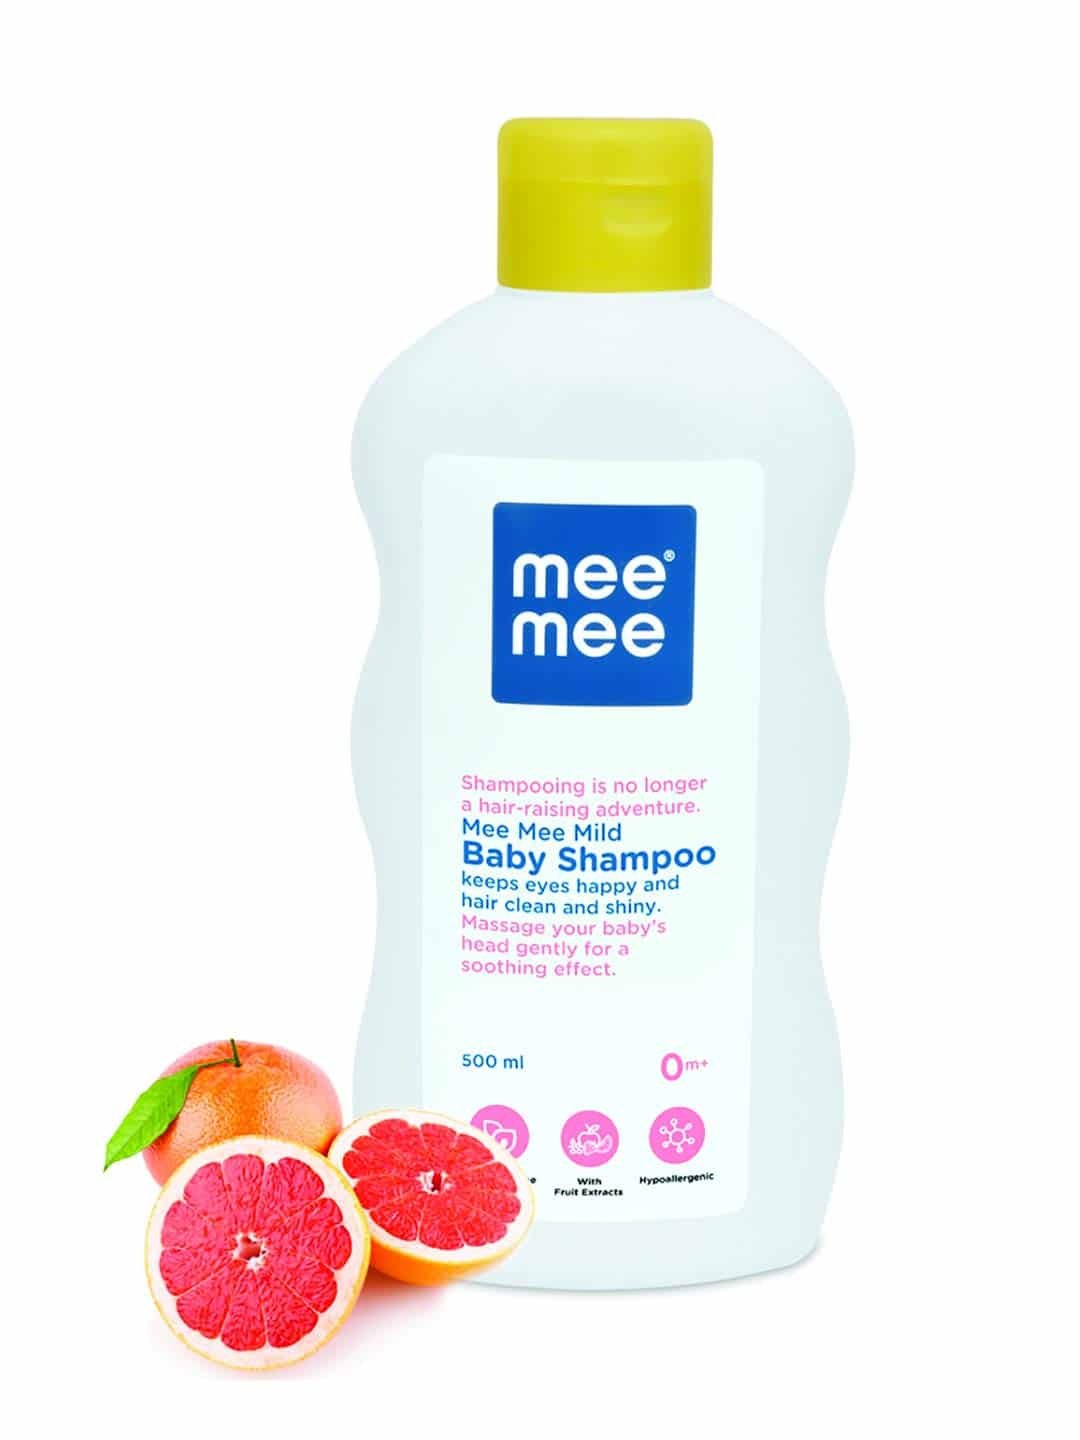 7. Mee Mee Mild Baby Shampoo